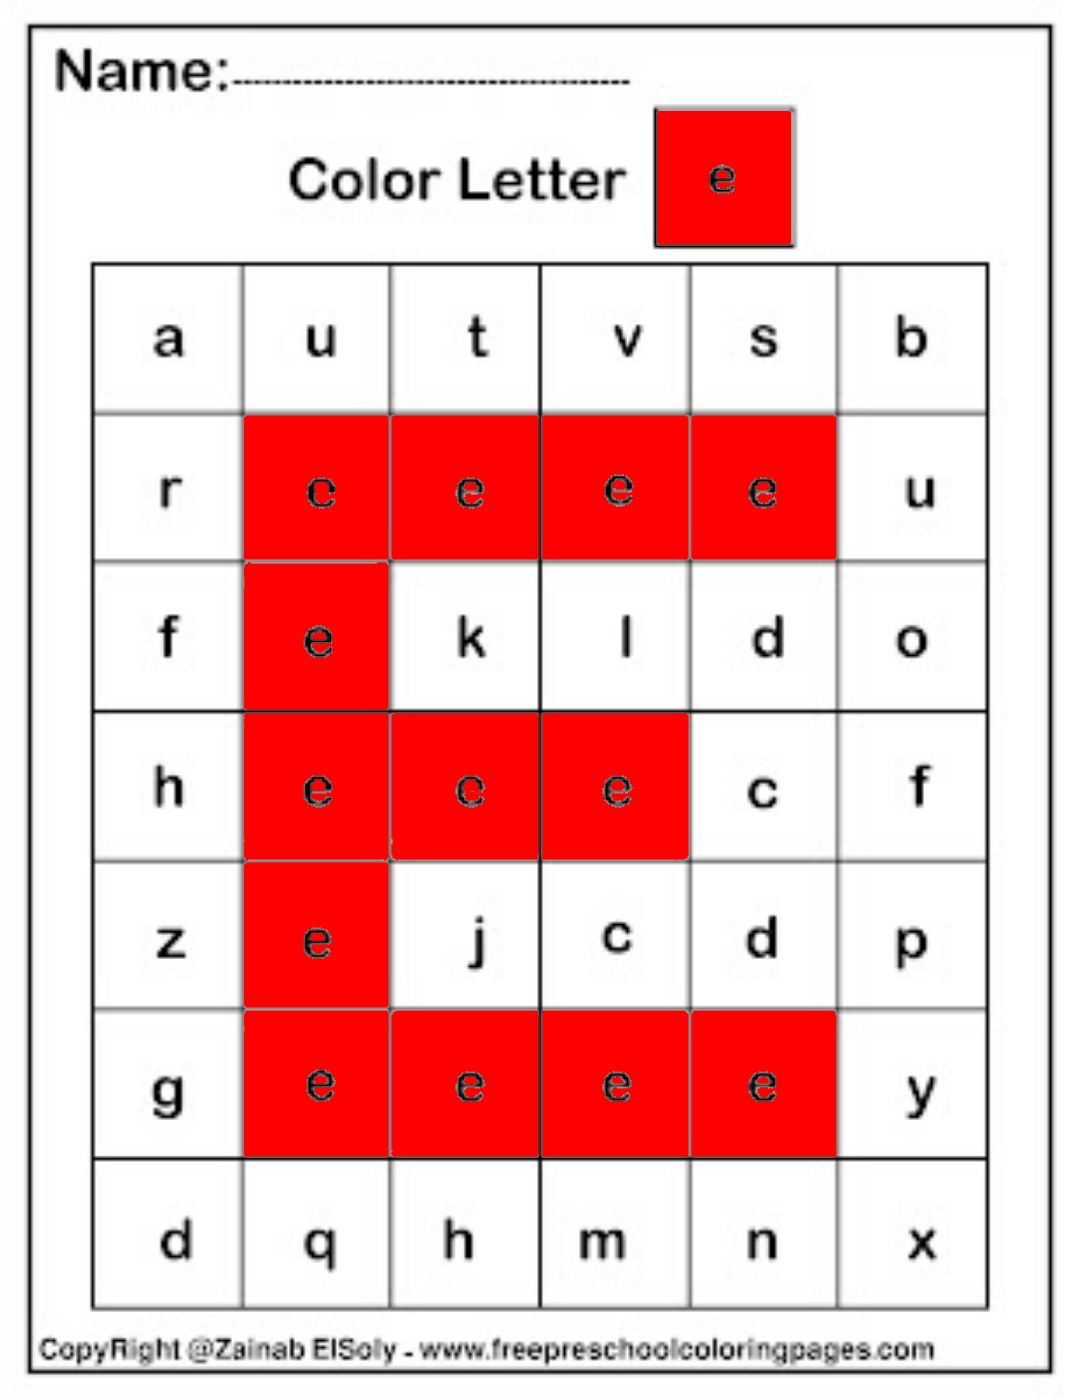  Color bởi Letter e Square Pïxels Free Preschool